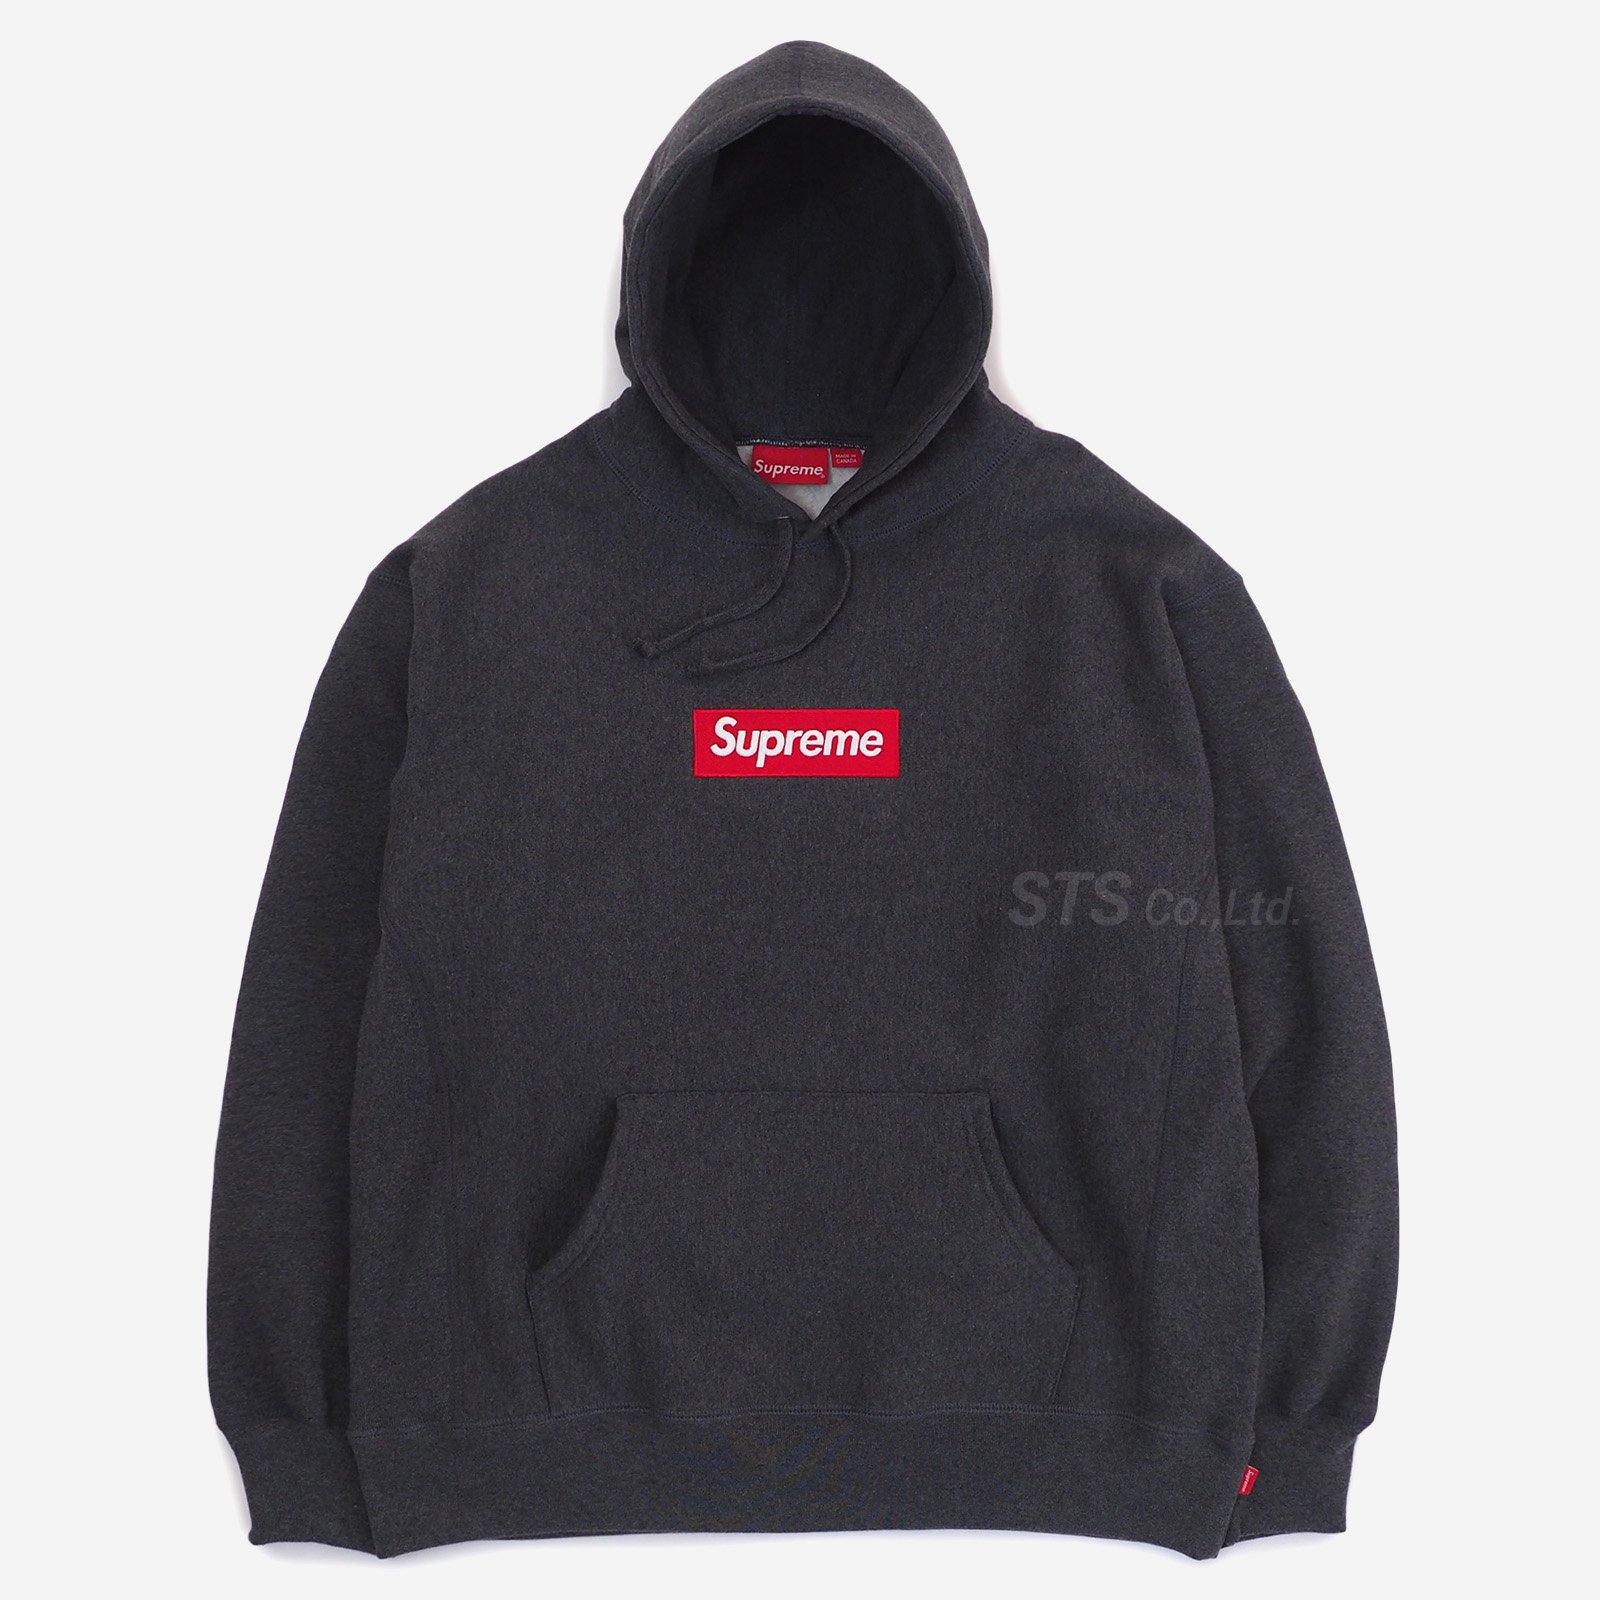 Lサイズ supreme Box Logo Hooded Sweatshirt